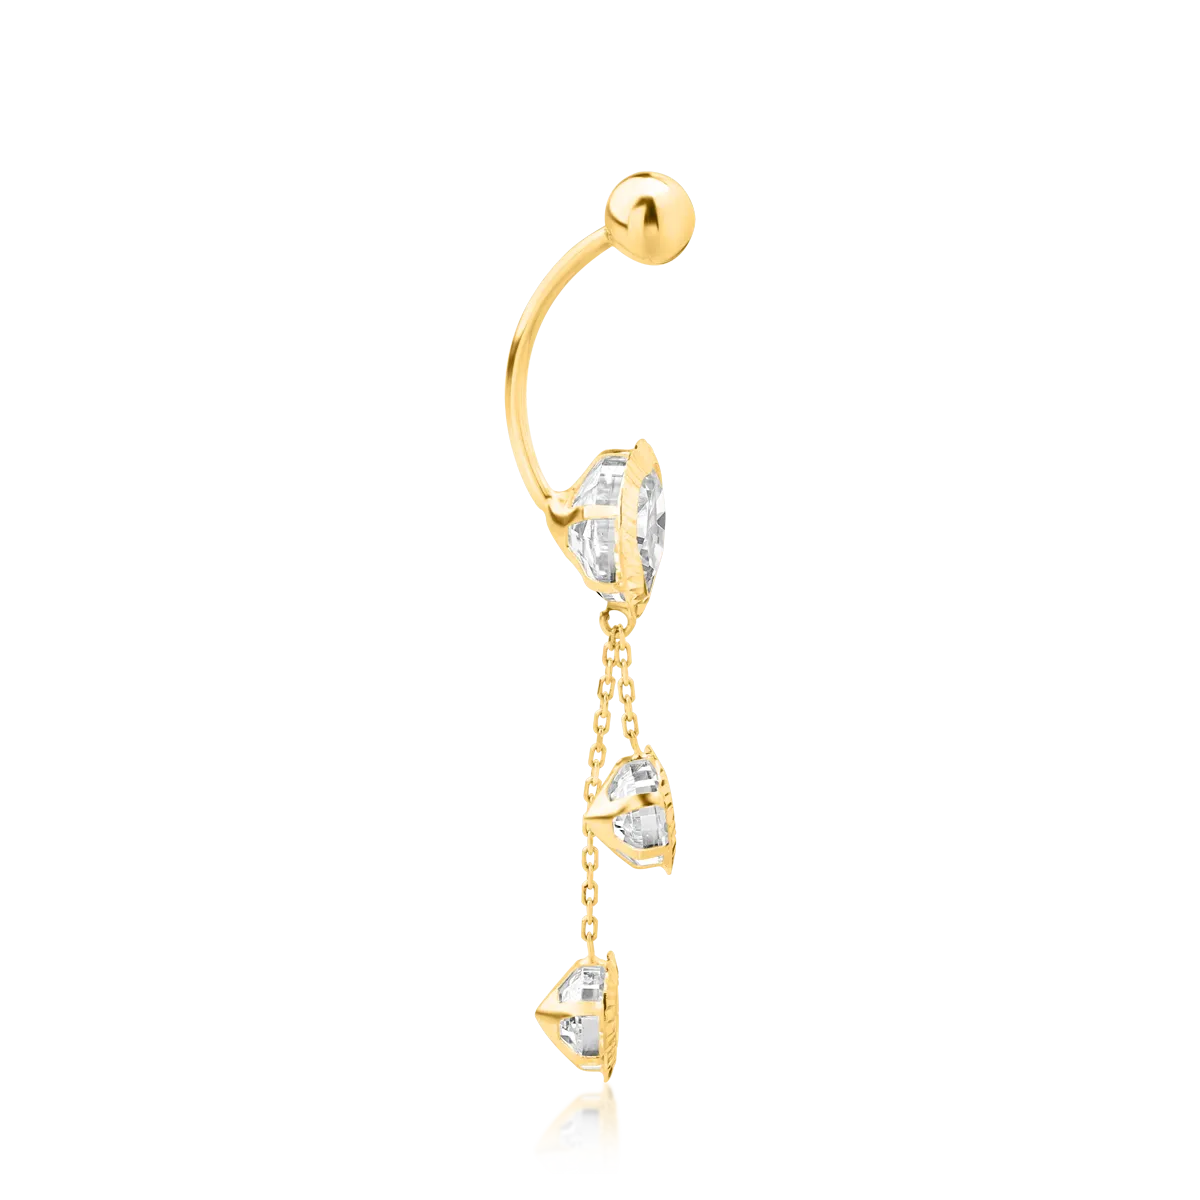 14K yellow gold belly-button piercing earring